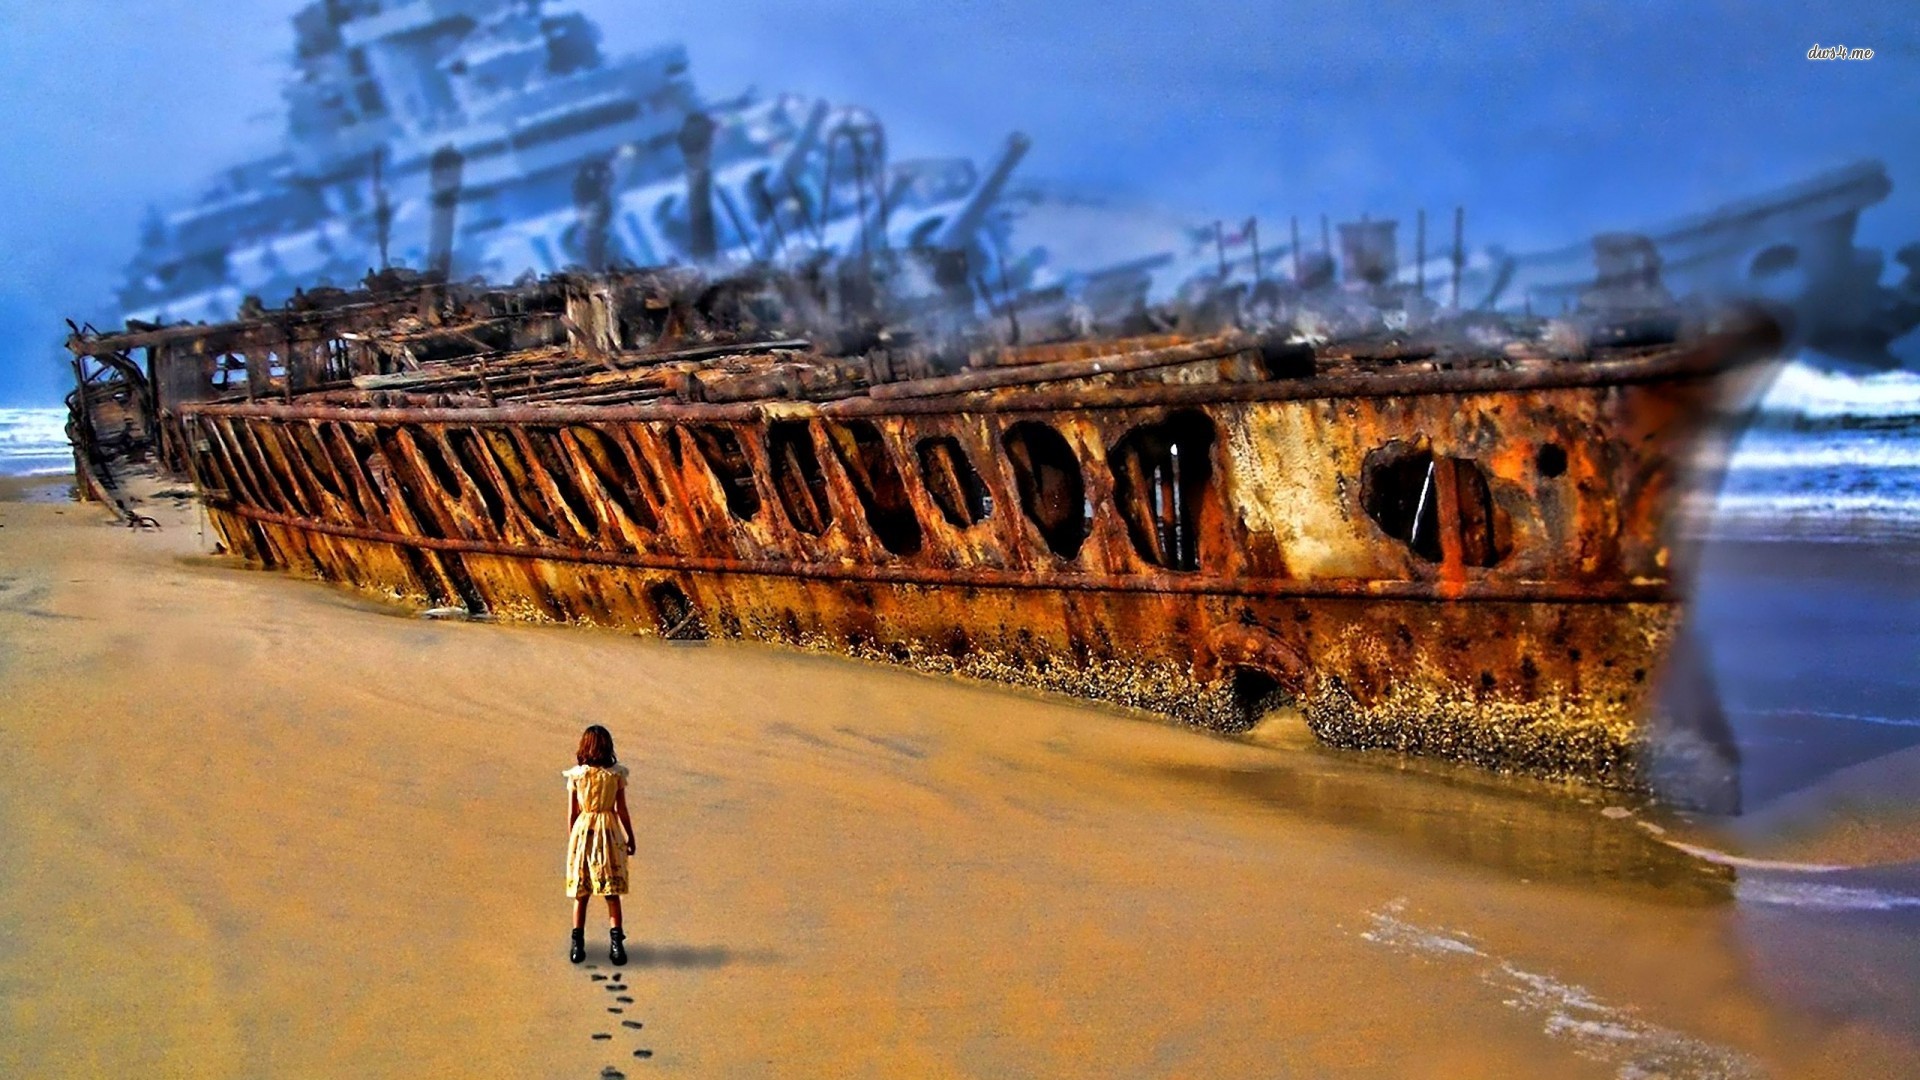 Shipwreck Wallpaper